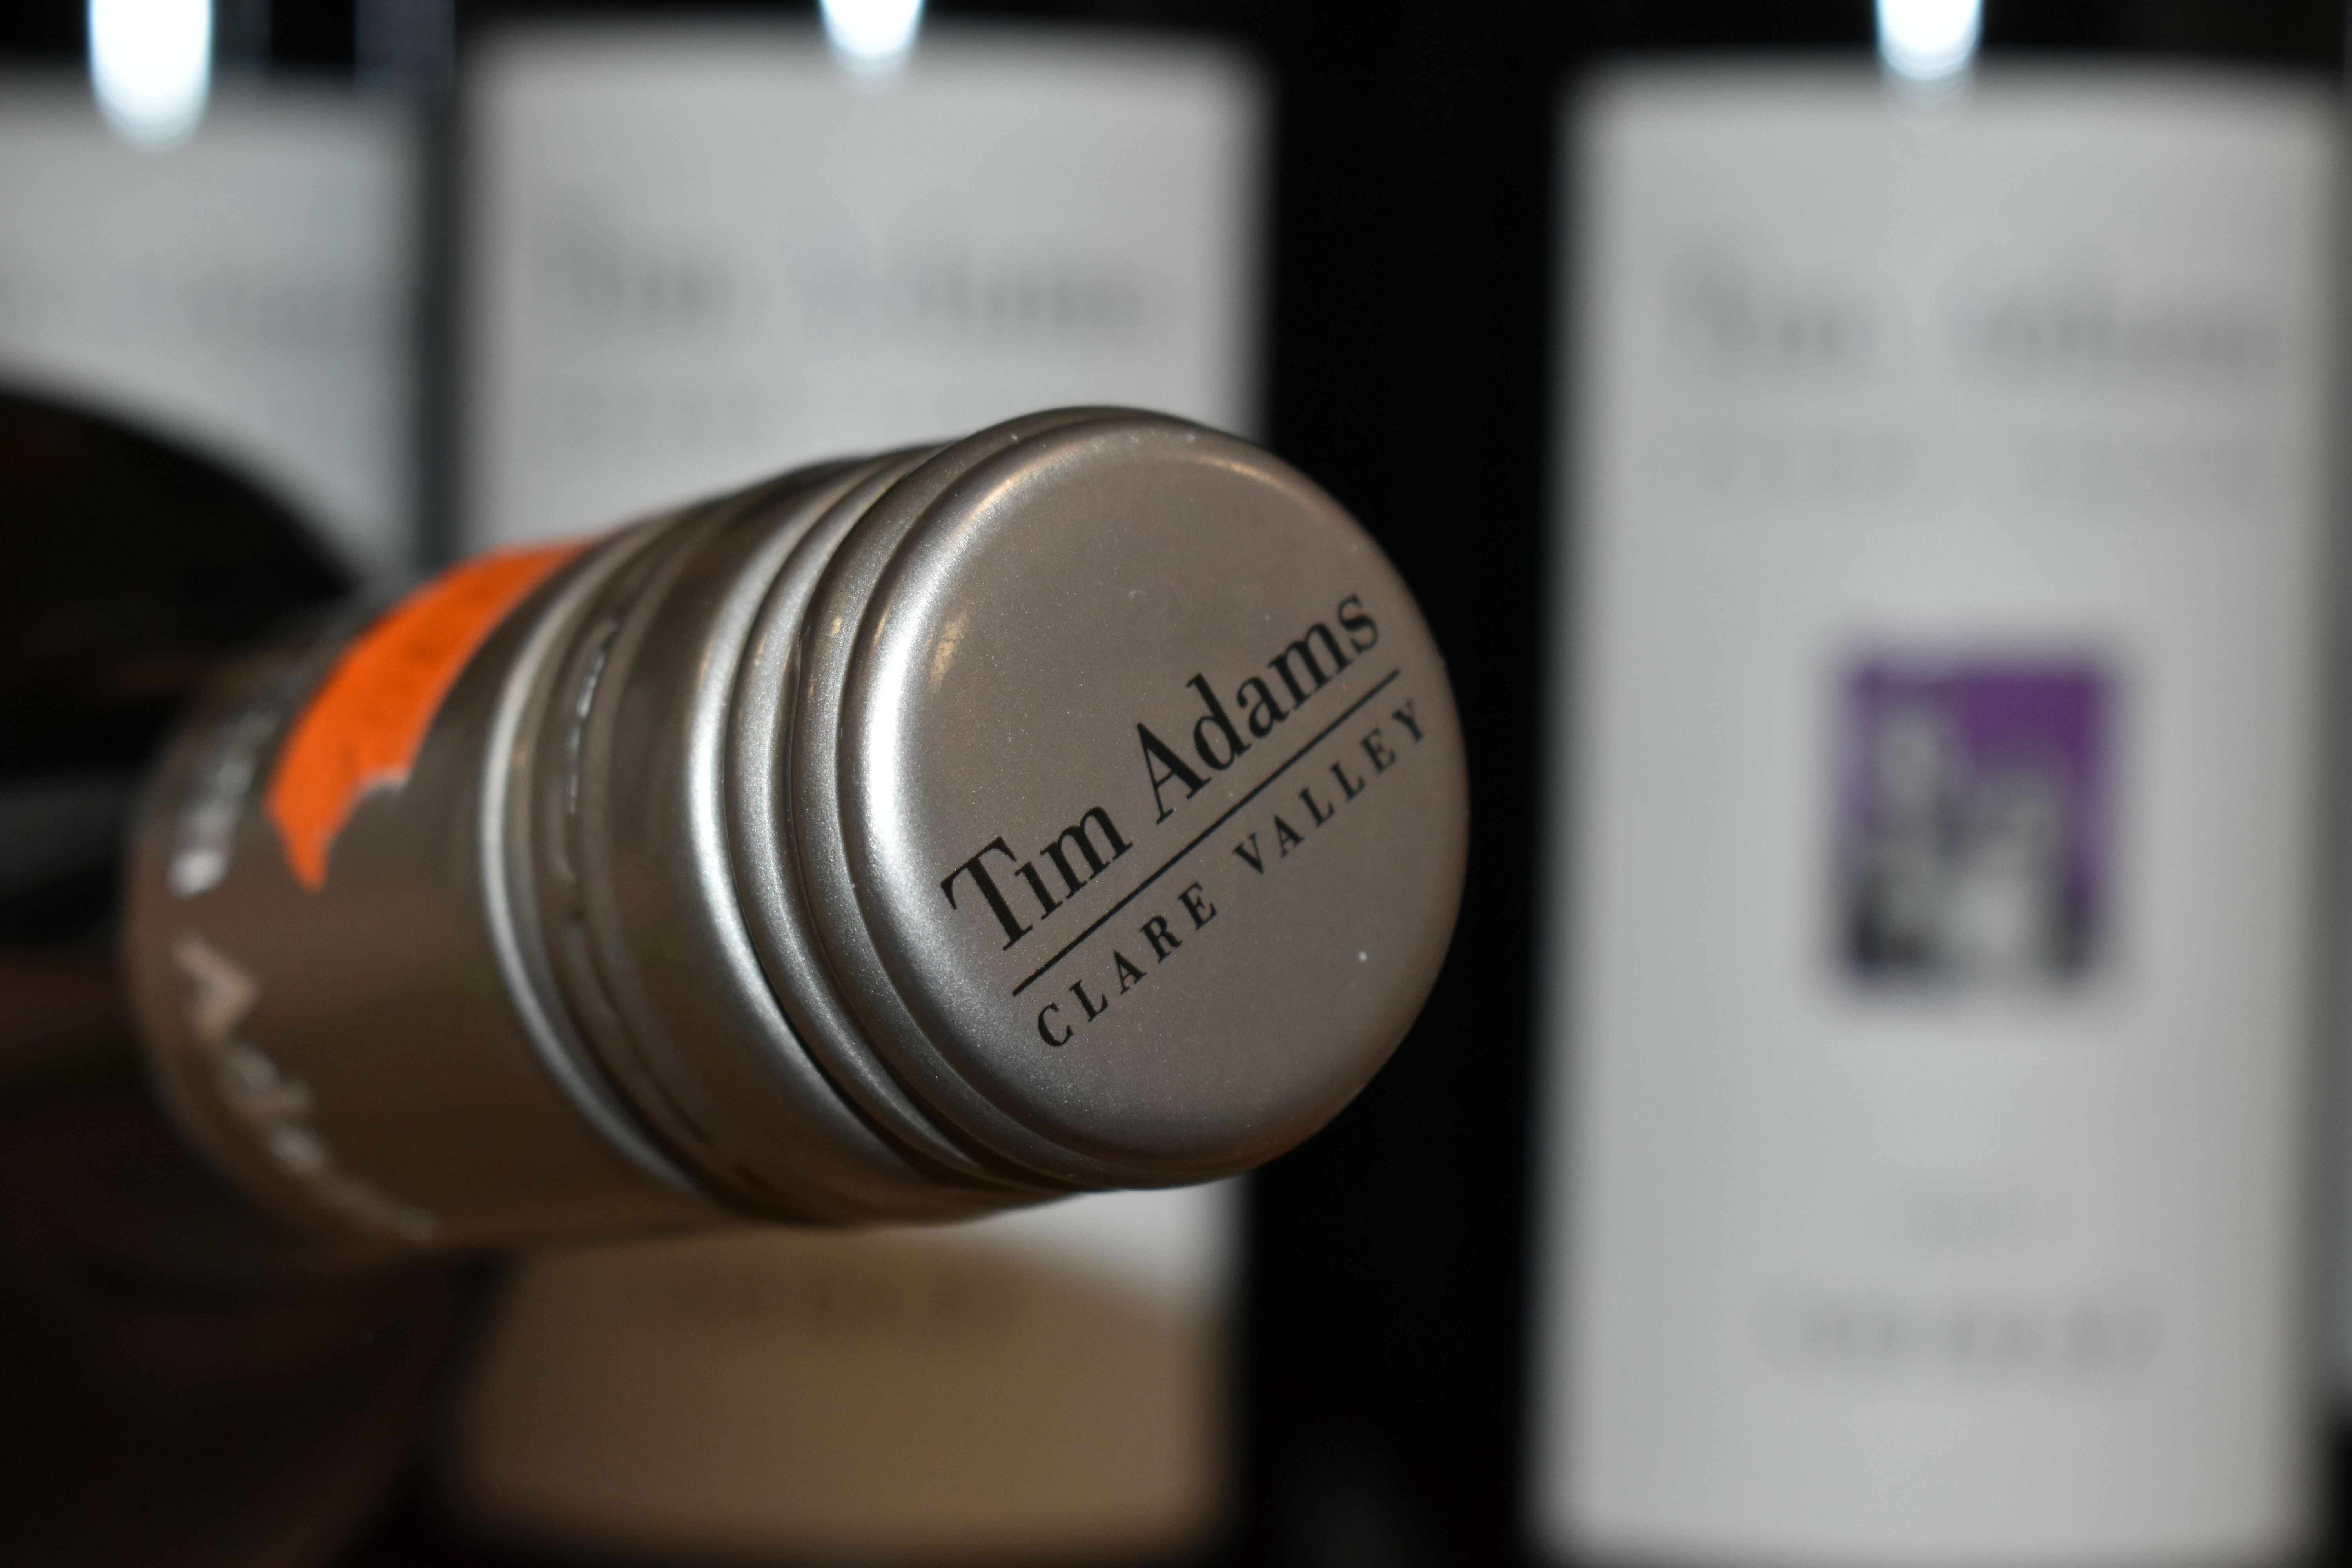 WINE, Twelve Bottles of TIM ADAMS CLARE VALLEY SHIRAZ 2017 (Aus) 14.9% vol. 750ml, all seals intact - Image 3 of 3